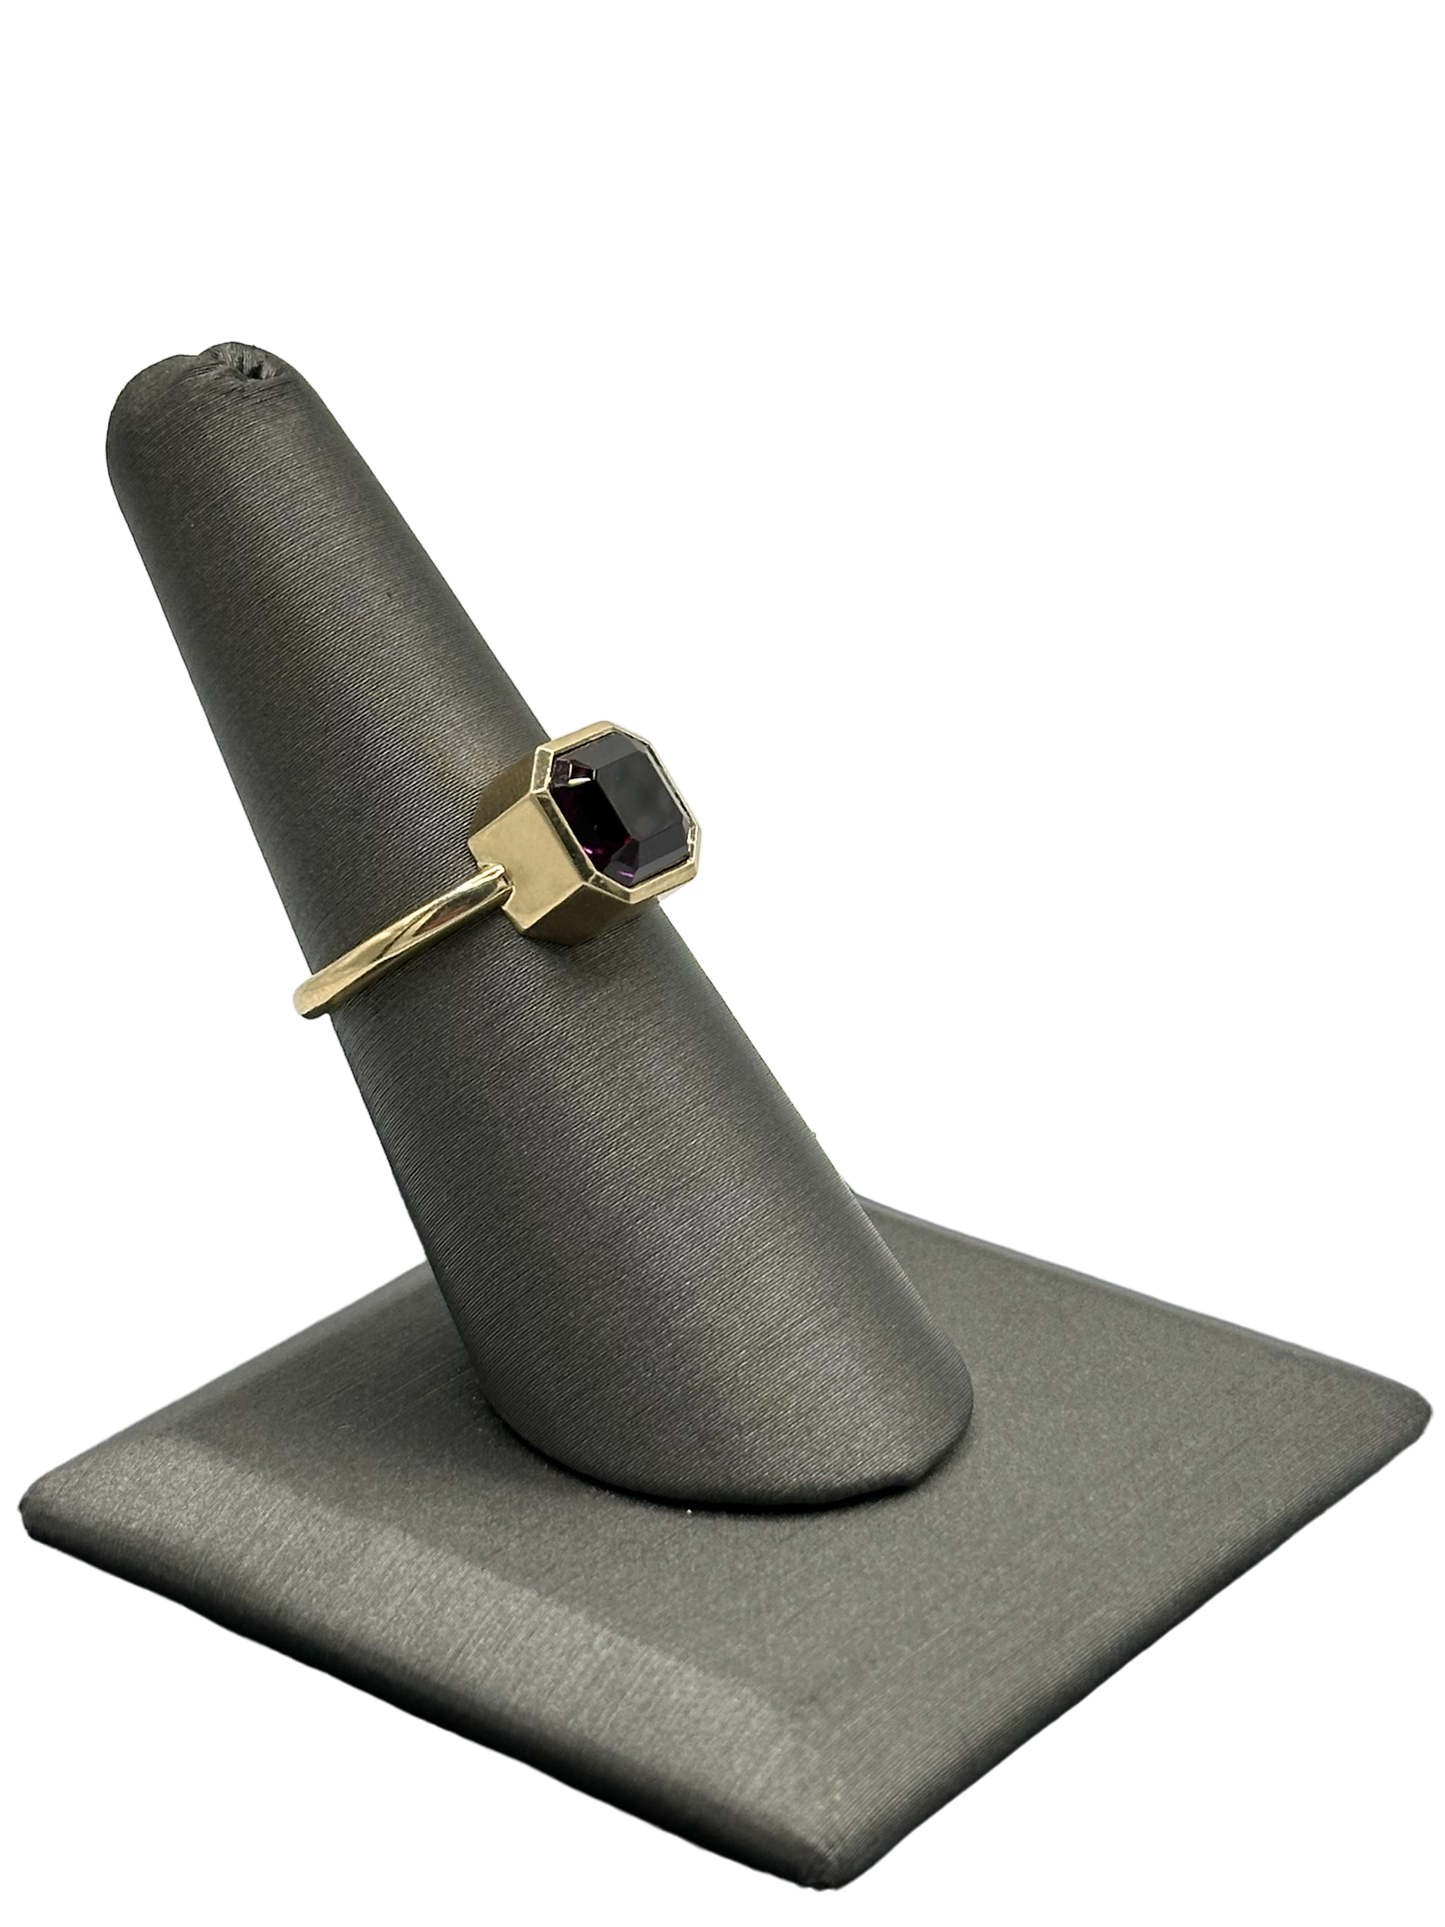 Rhodolite Garnet Ring